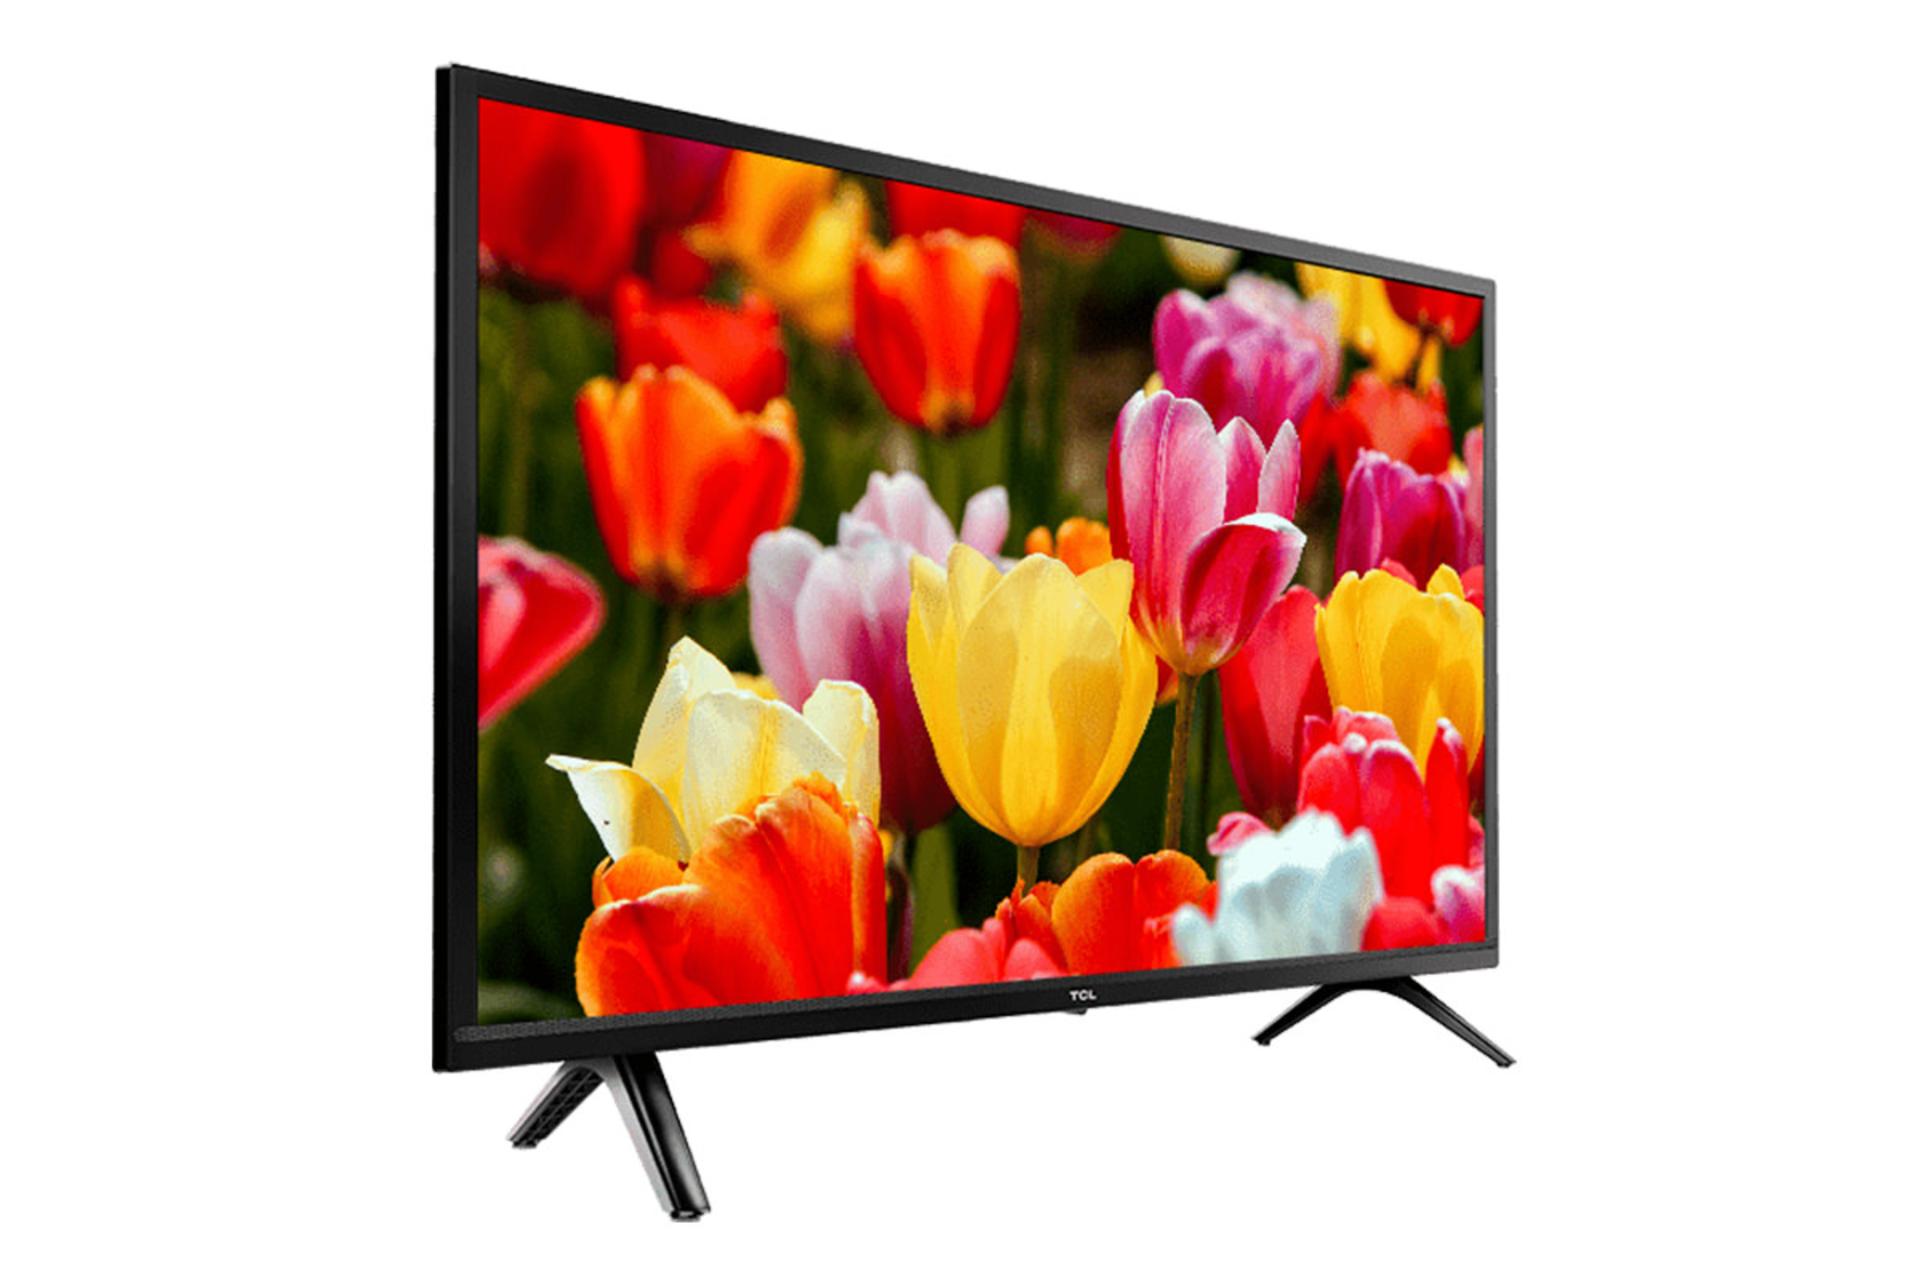 قیمت تلویزیون تی سی ال D3200 مدل 32 اینچ + مشخصات